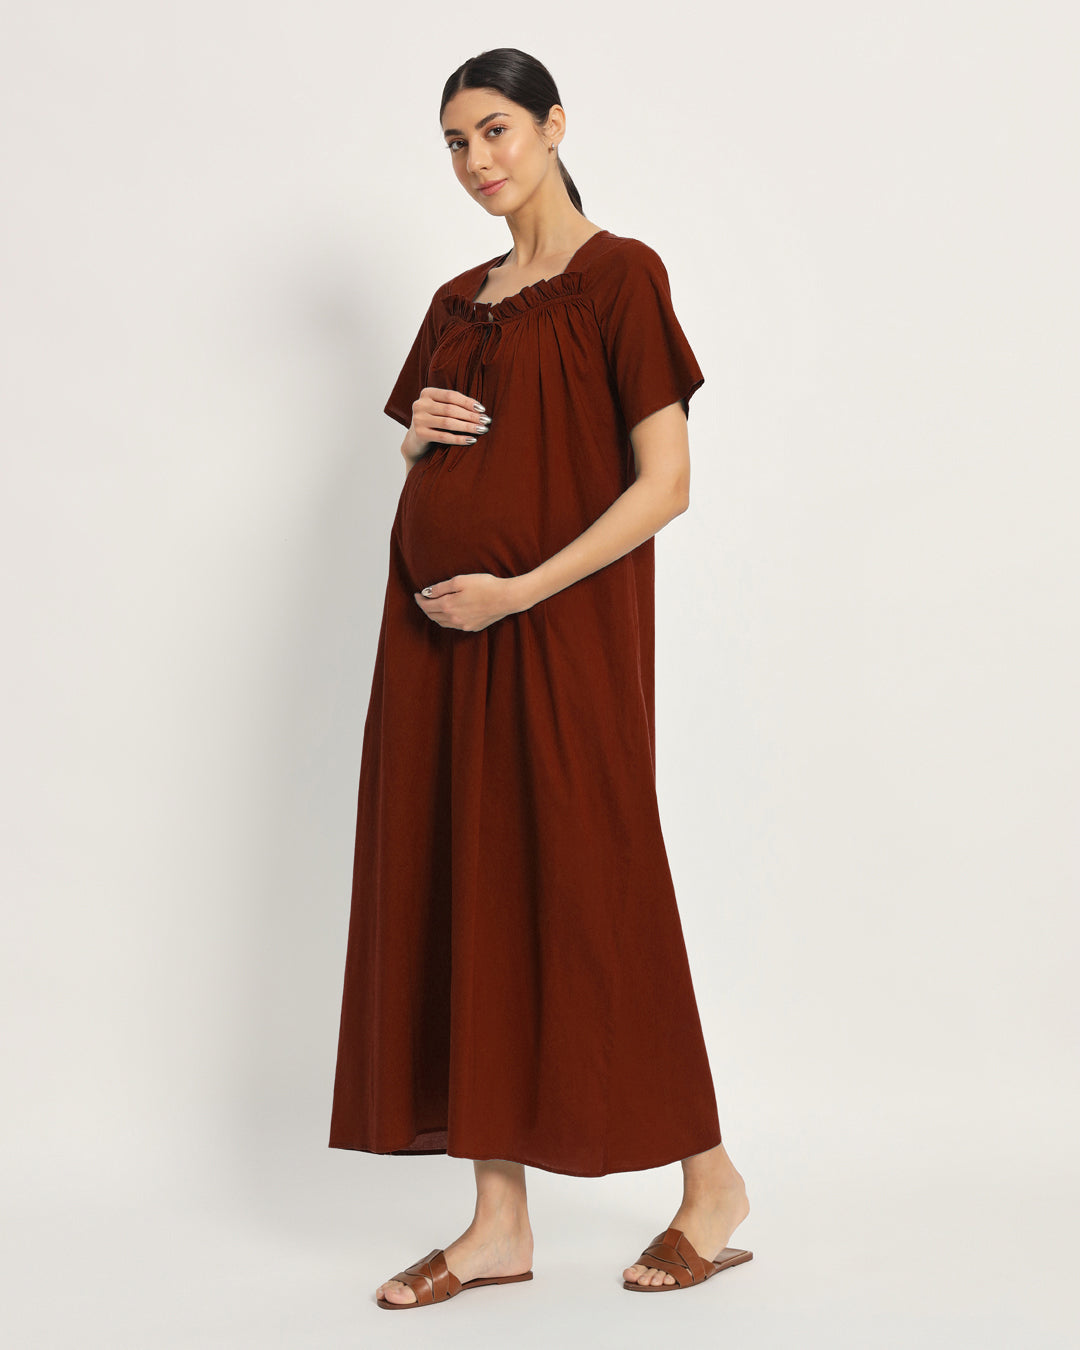 Combo: Russet Red & Wisteria Purple Nurture N' Shine Maternity & Nursing Dress